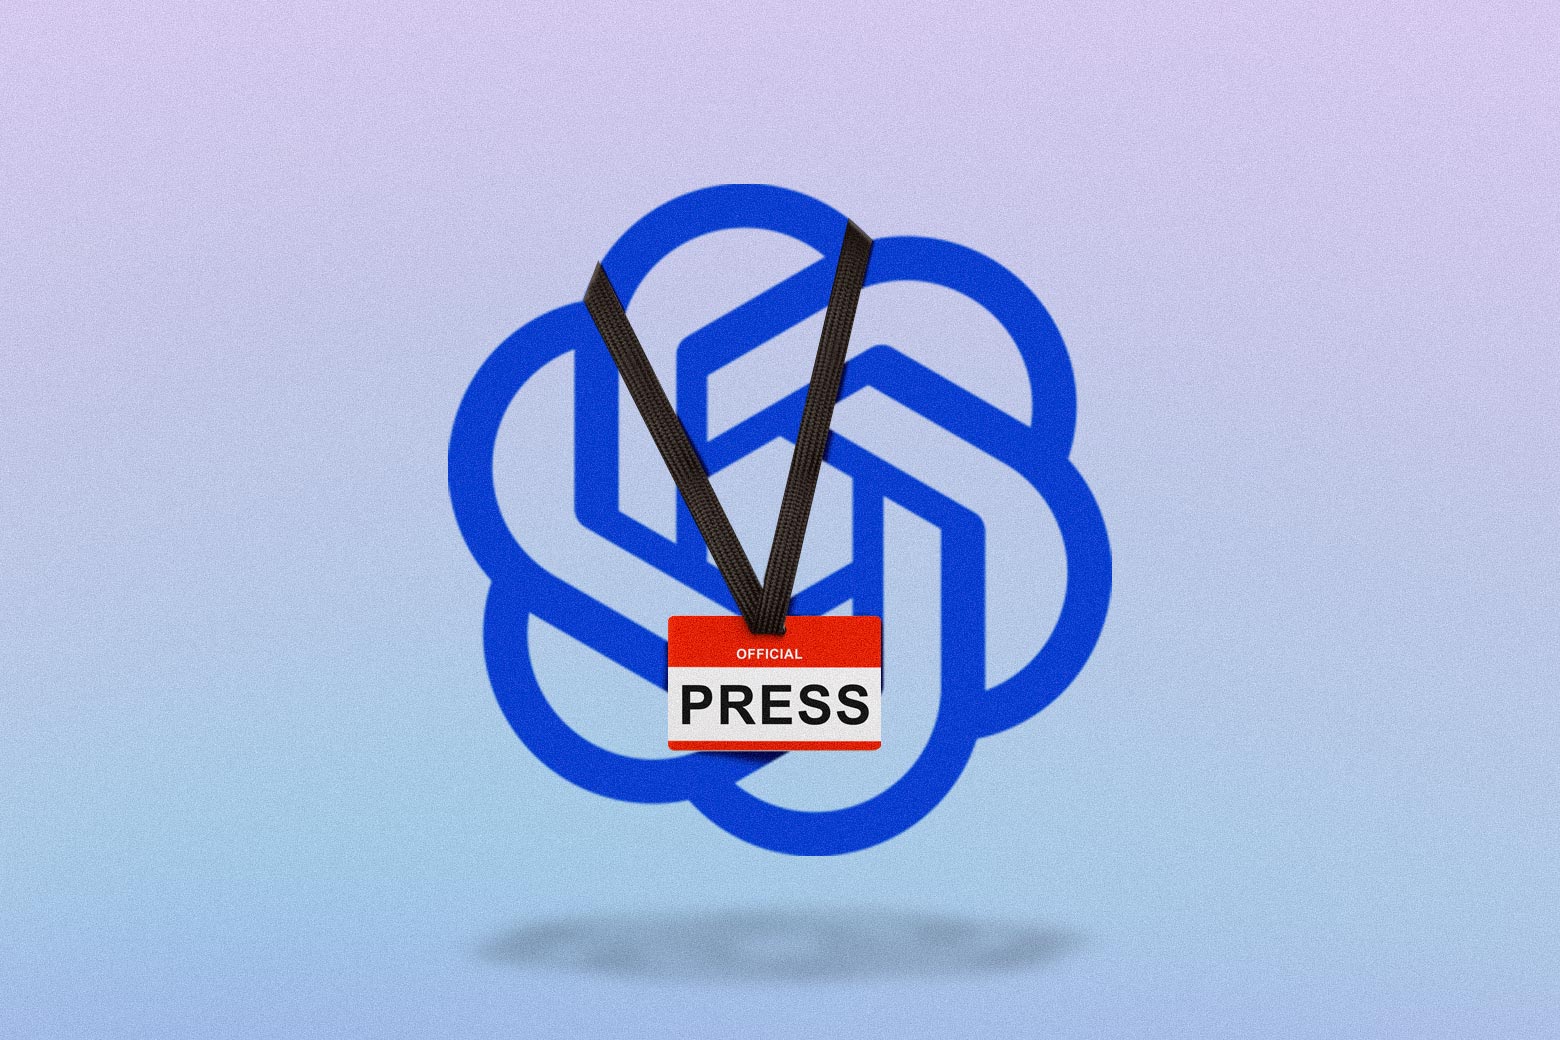 The OpenAI logo wearing a press badge.